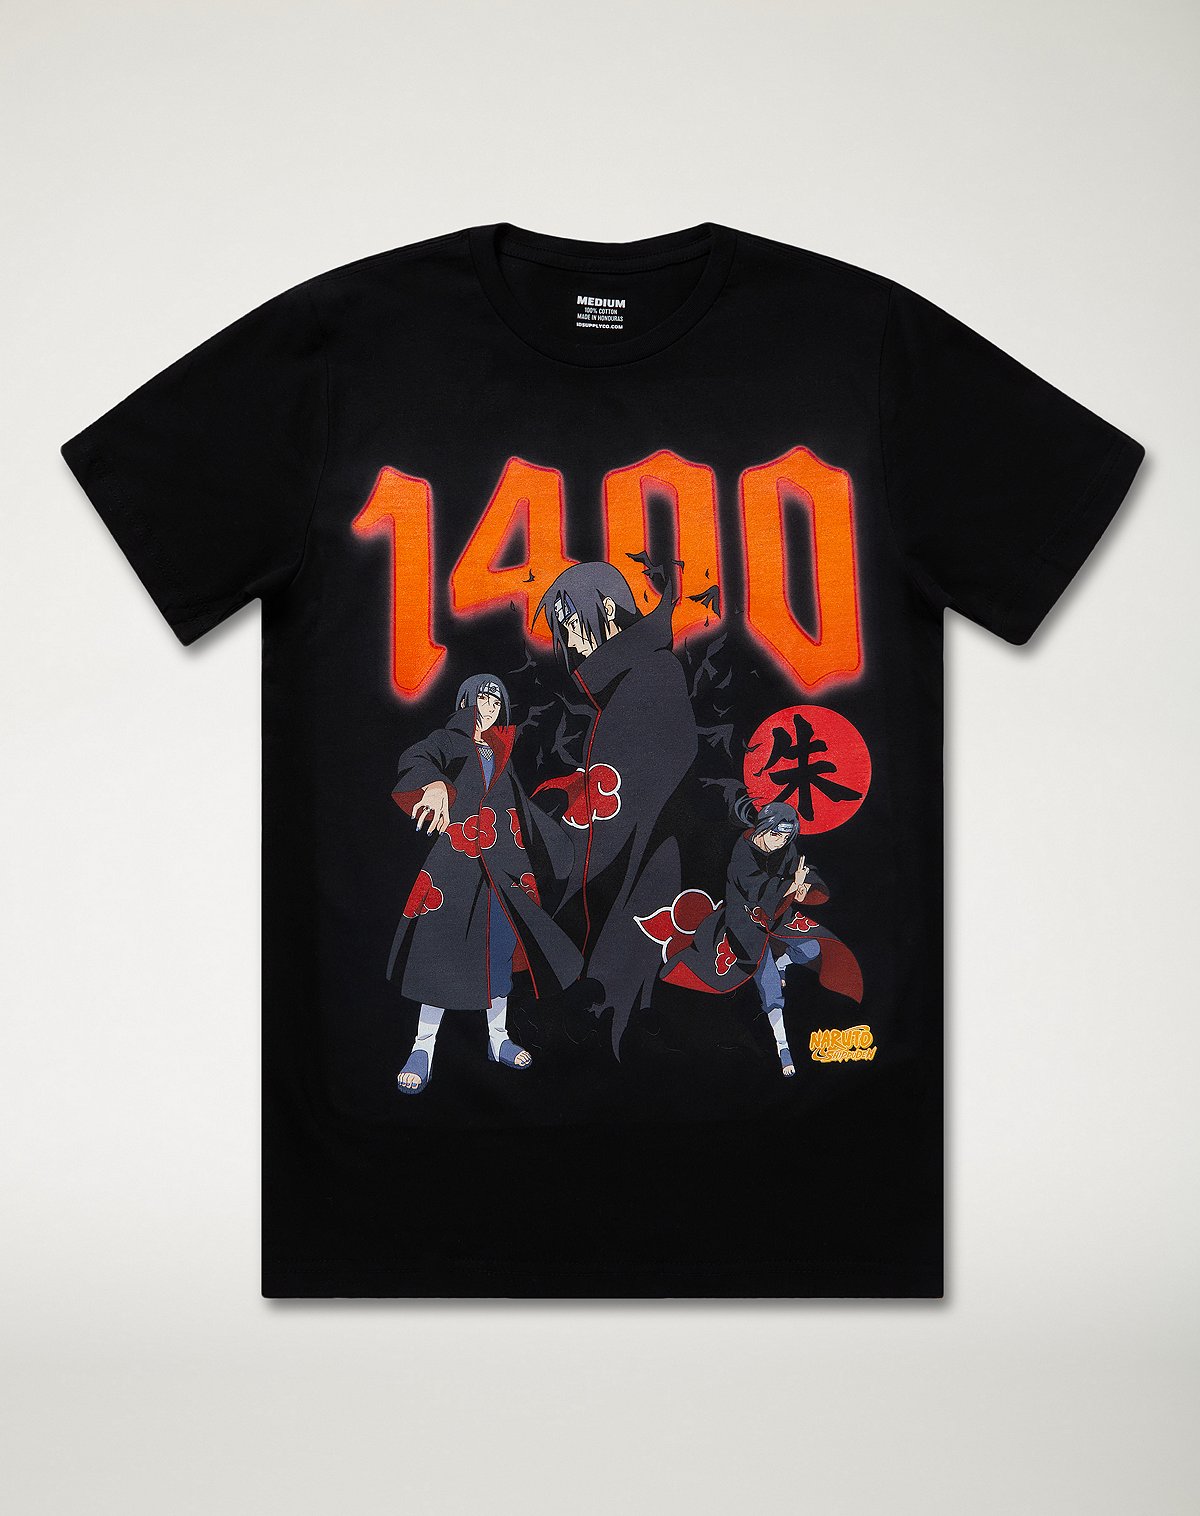 Itachi Uchiha 1400 T Shirt - 1400 x Naruto Shippuden